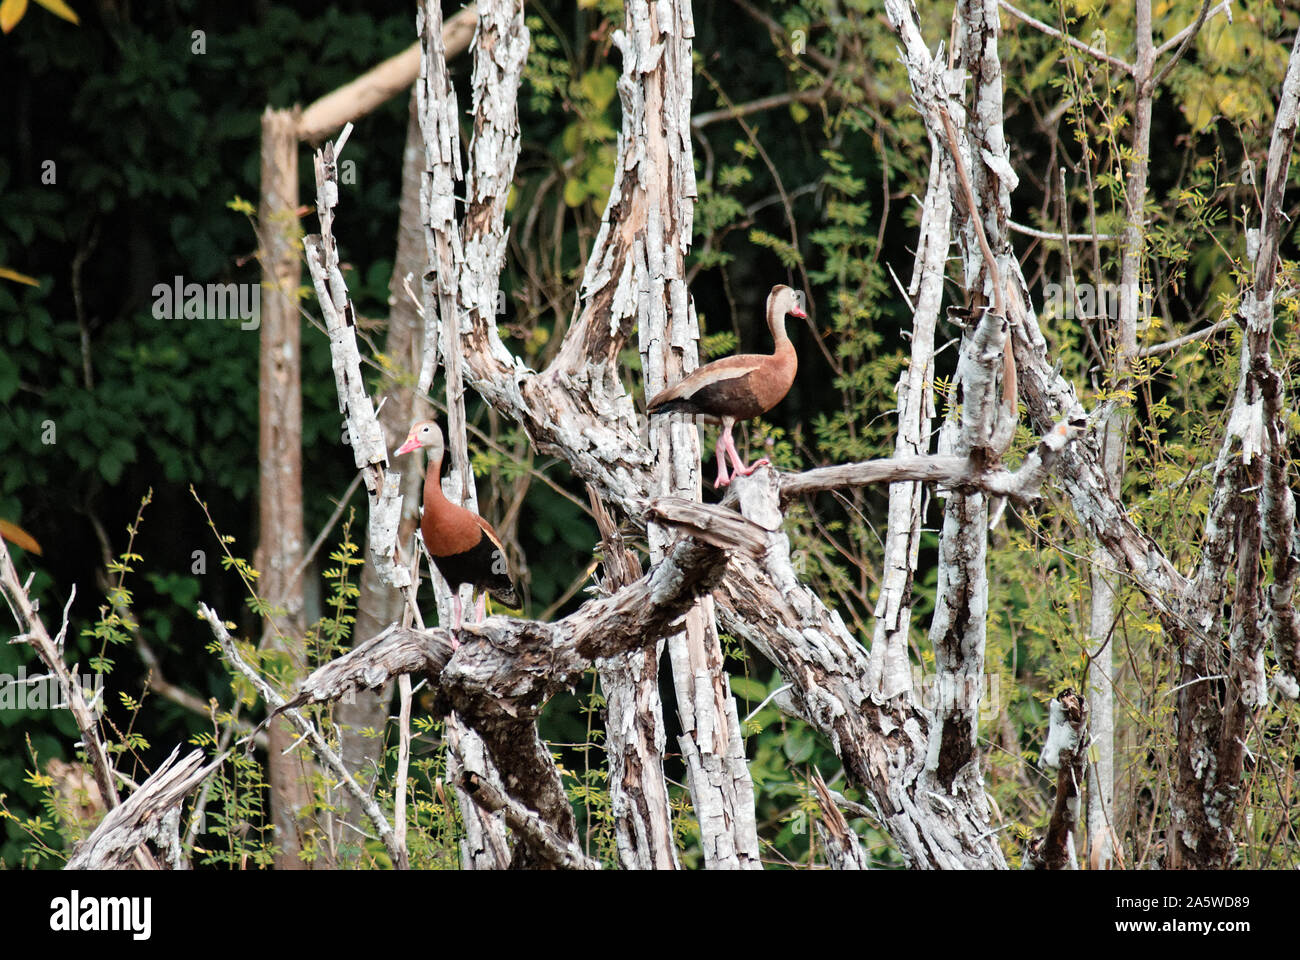 Campeche, México - Noviembre 17, 2014: Dos patos silbido curva negra en la rama de un árbol Foto de stock